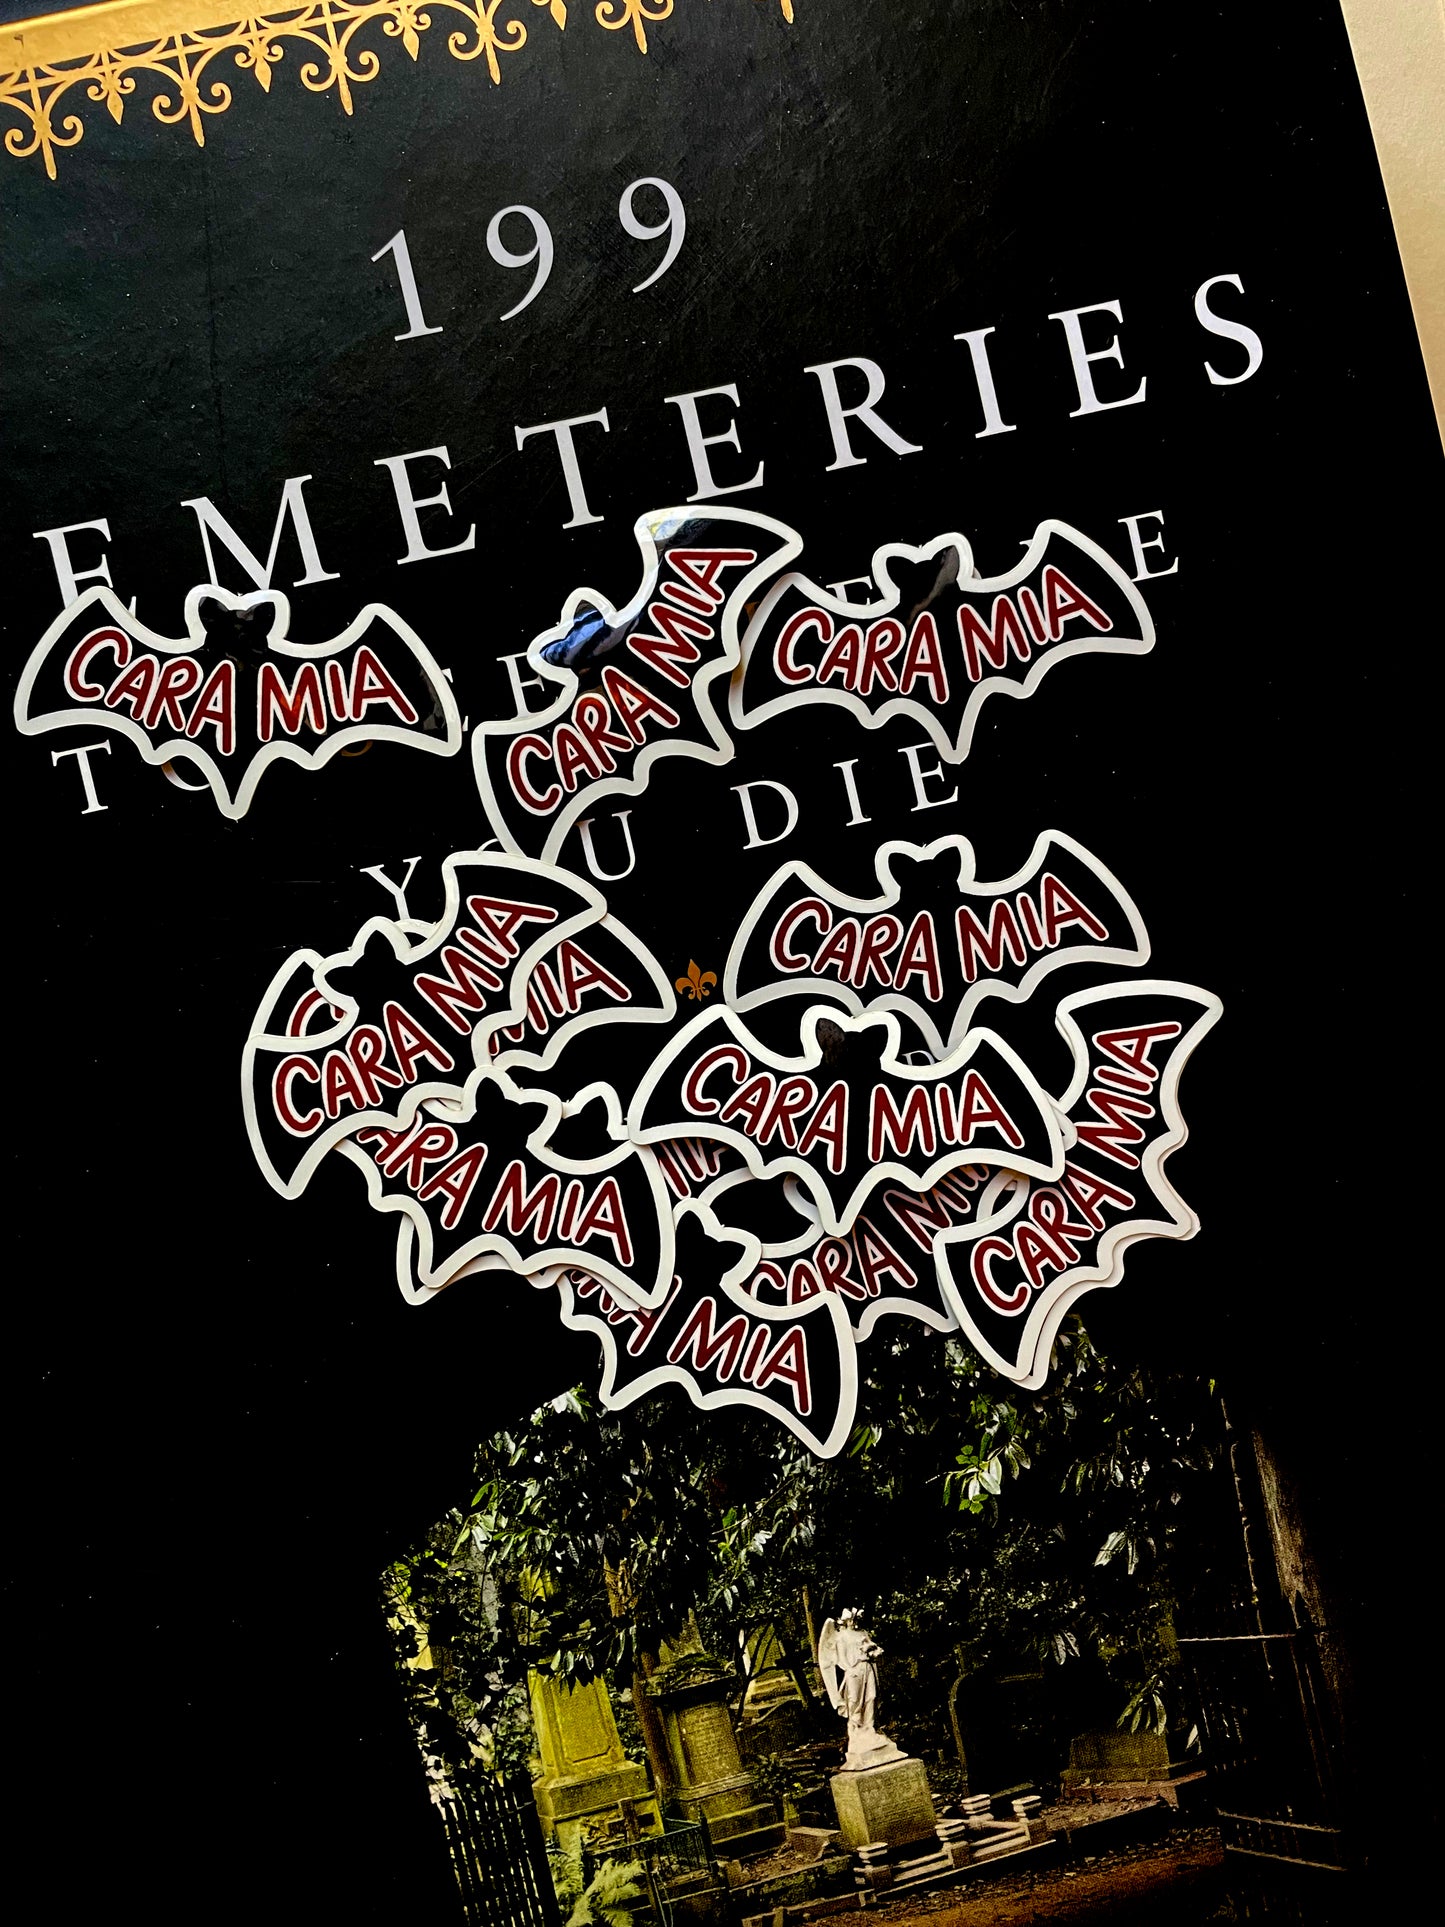 Cara Mia Sticker - Addams Family Sticker, Spooky Sticker, Bat Sticker